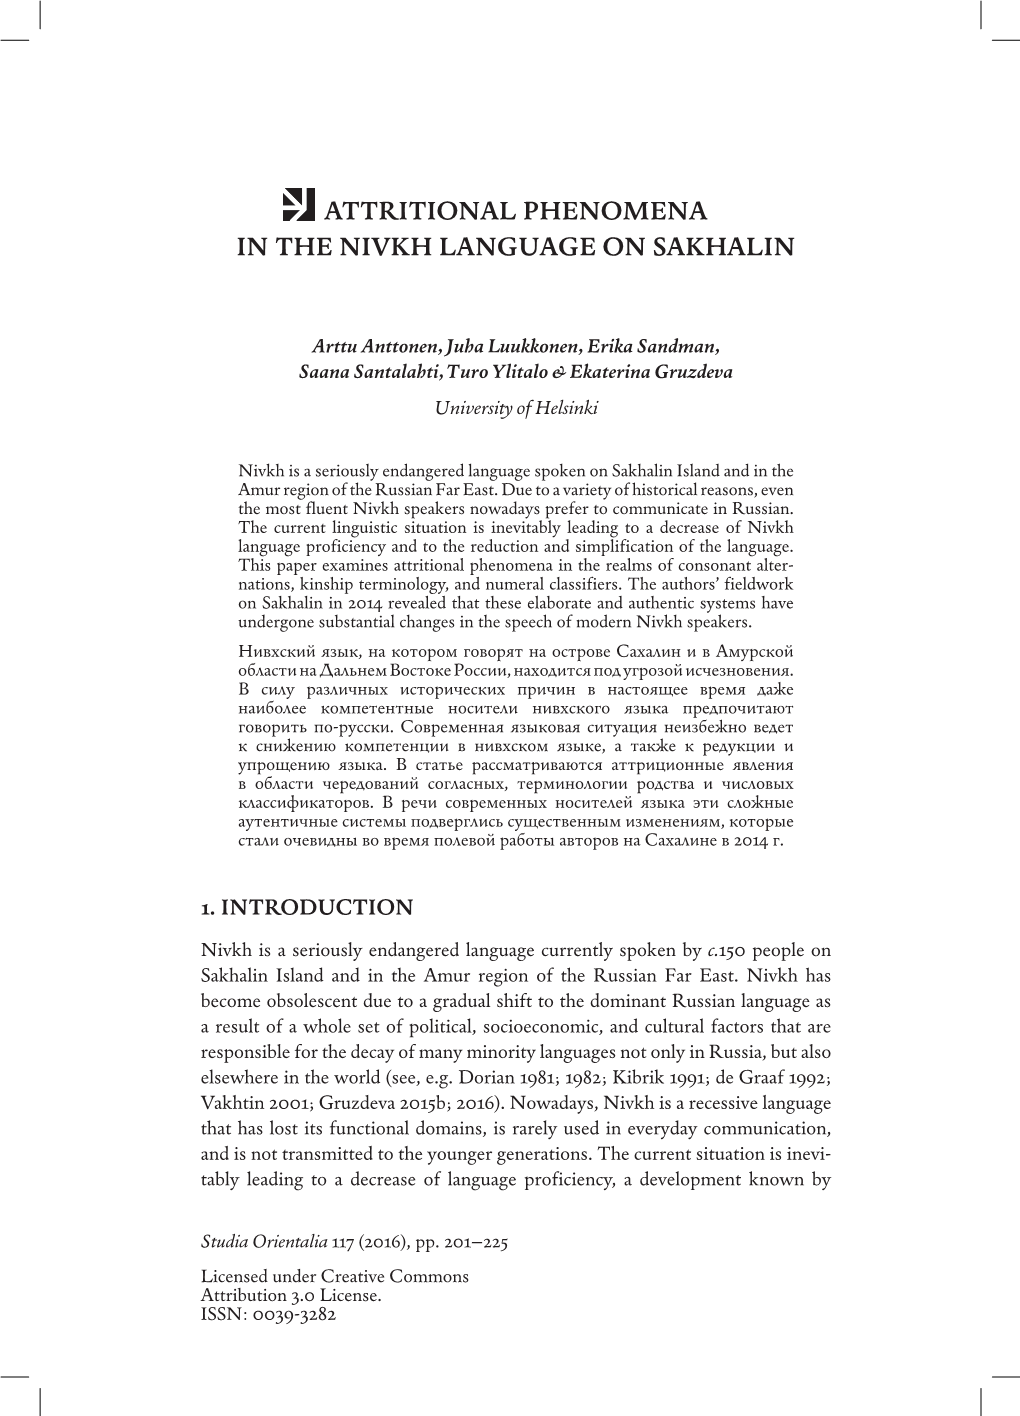 Attritional Phenomena in the Nivkh Language on Sakhalin